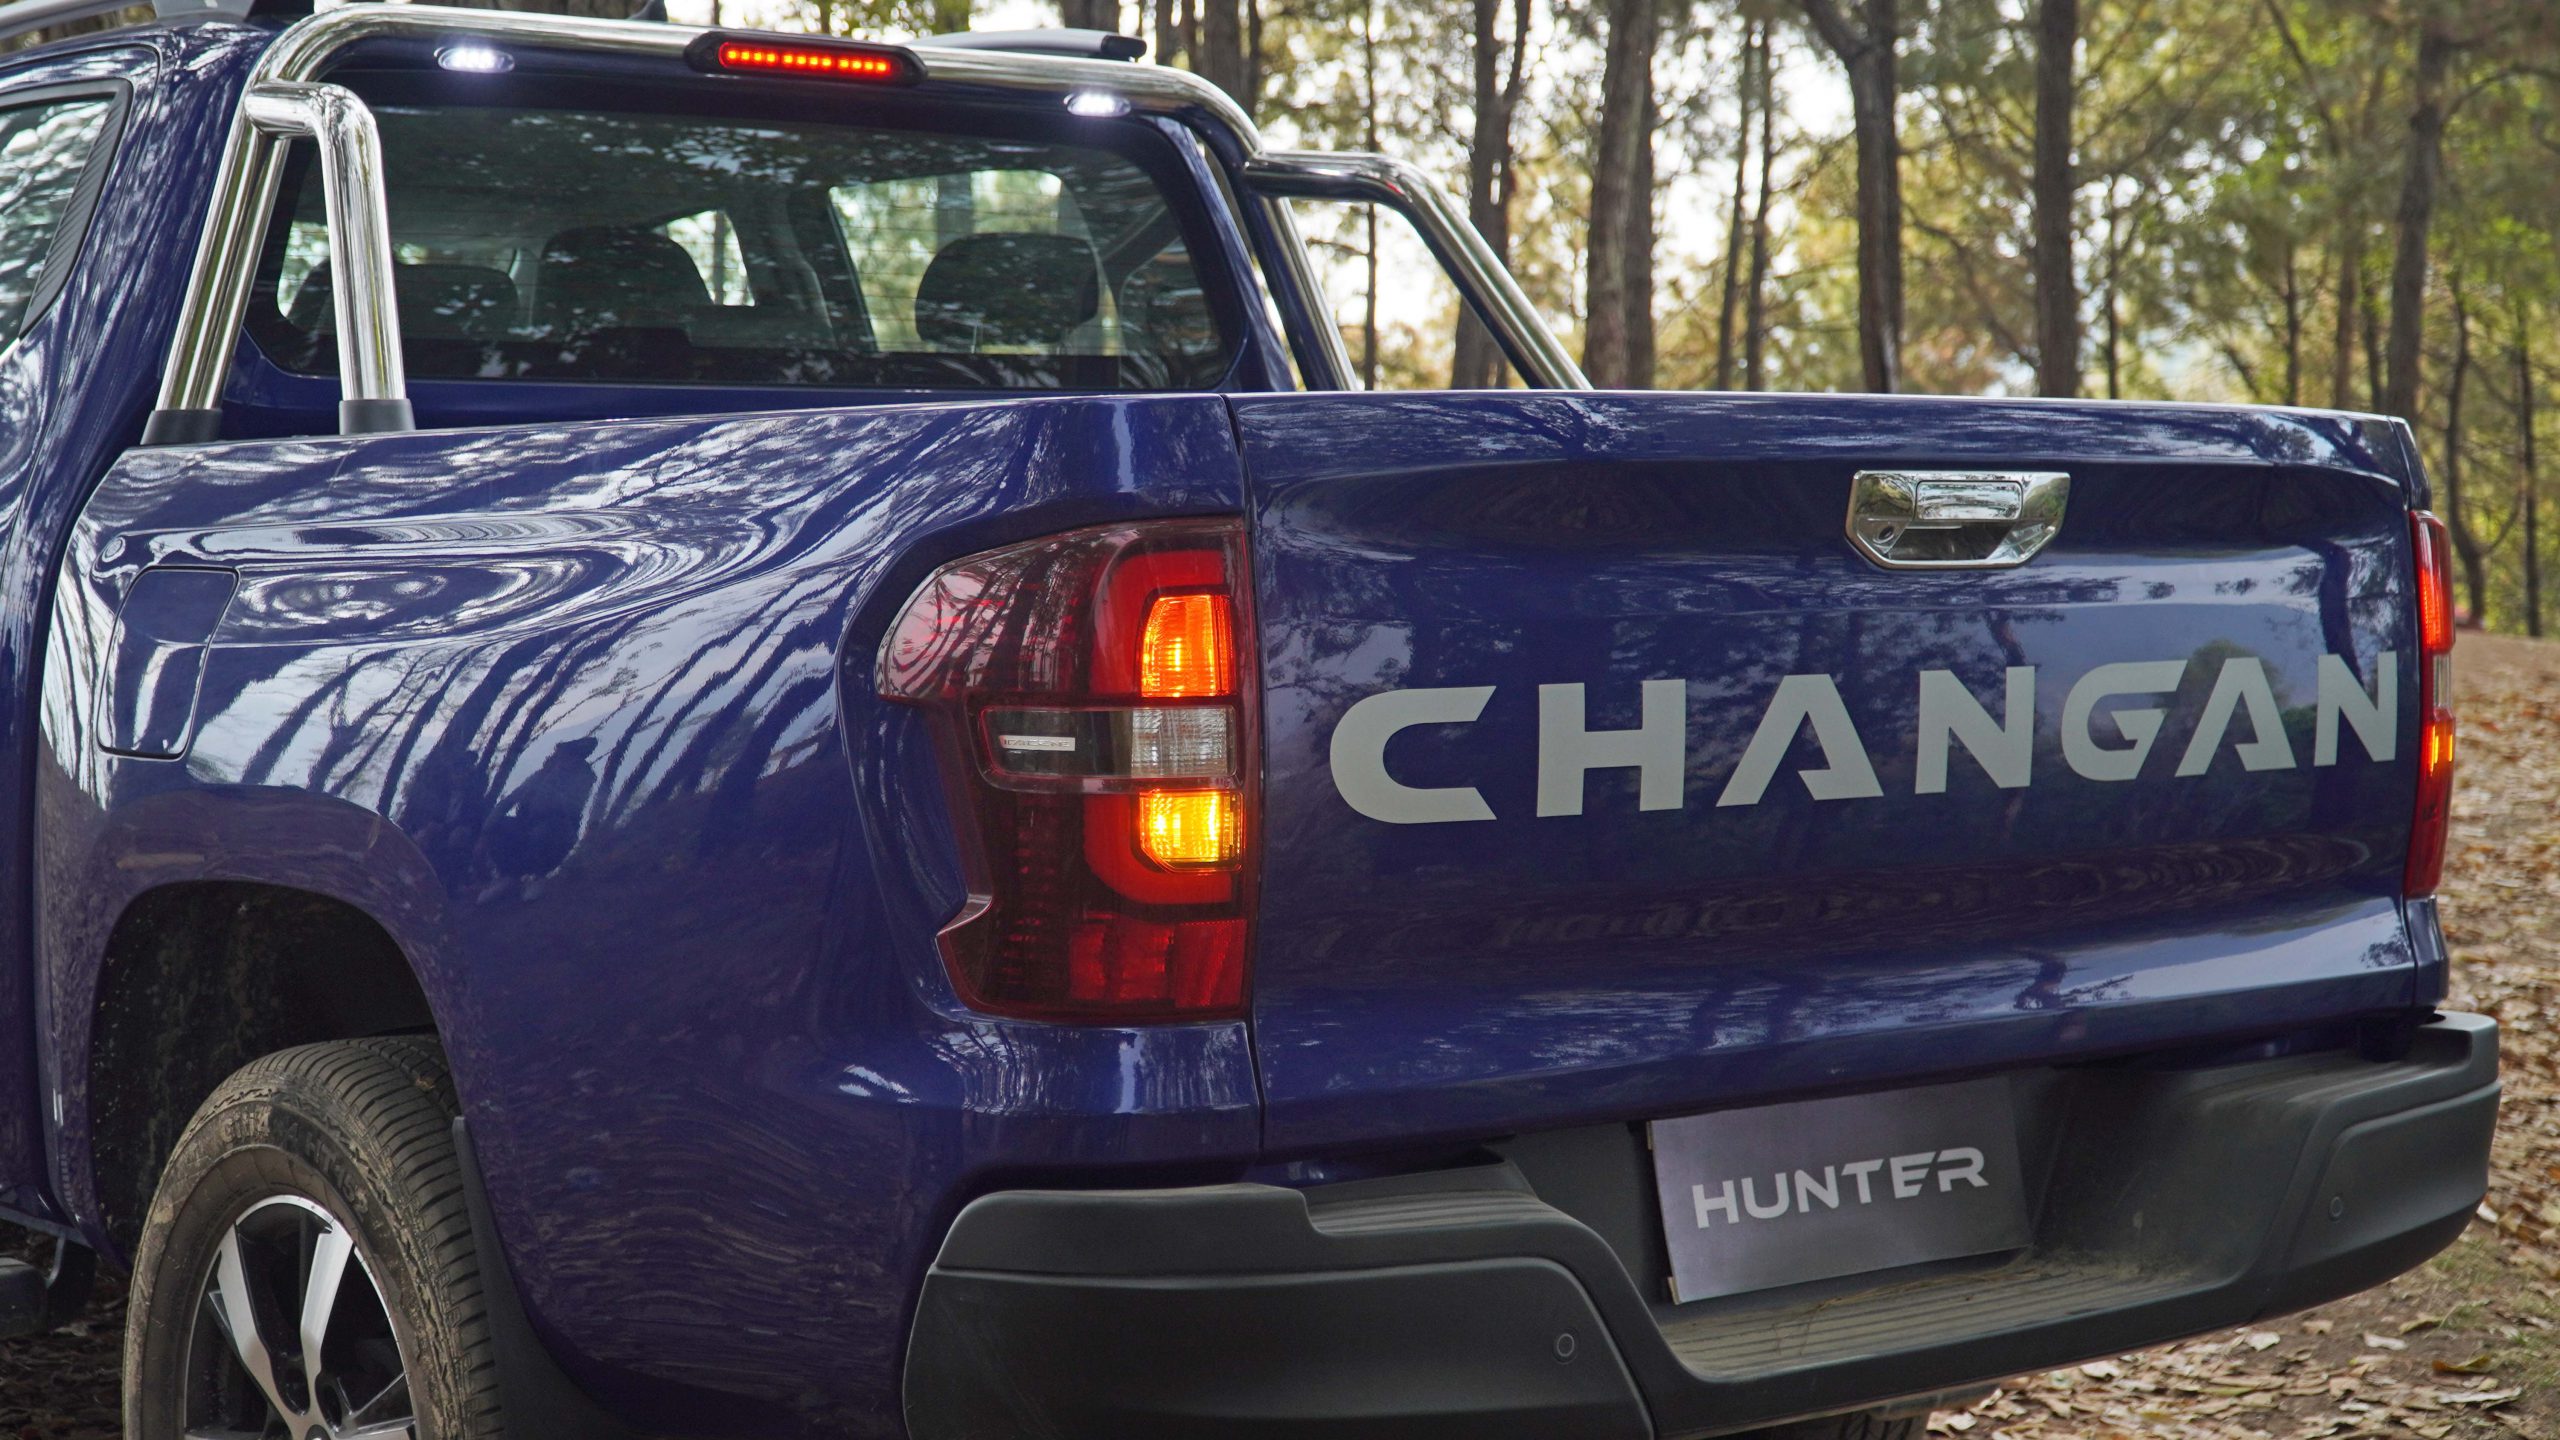 Changan Hunter C-Shaped LED Tail Light